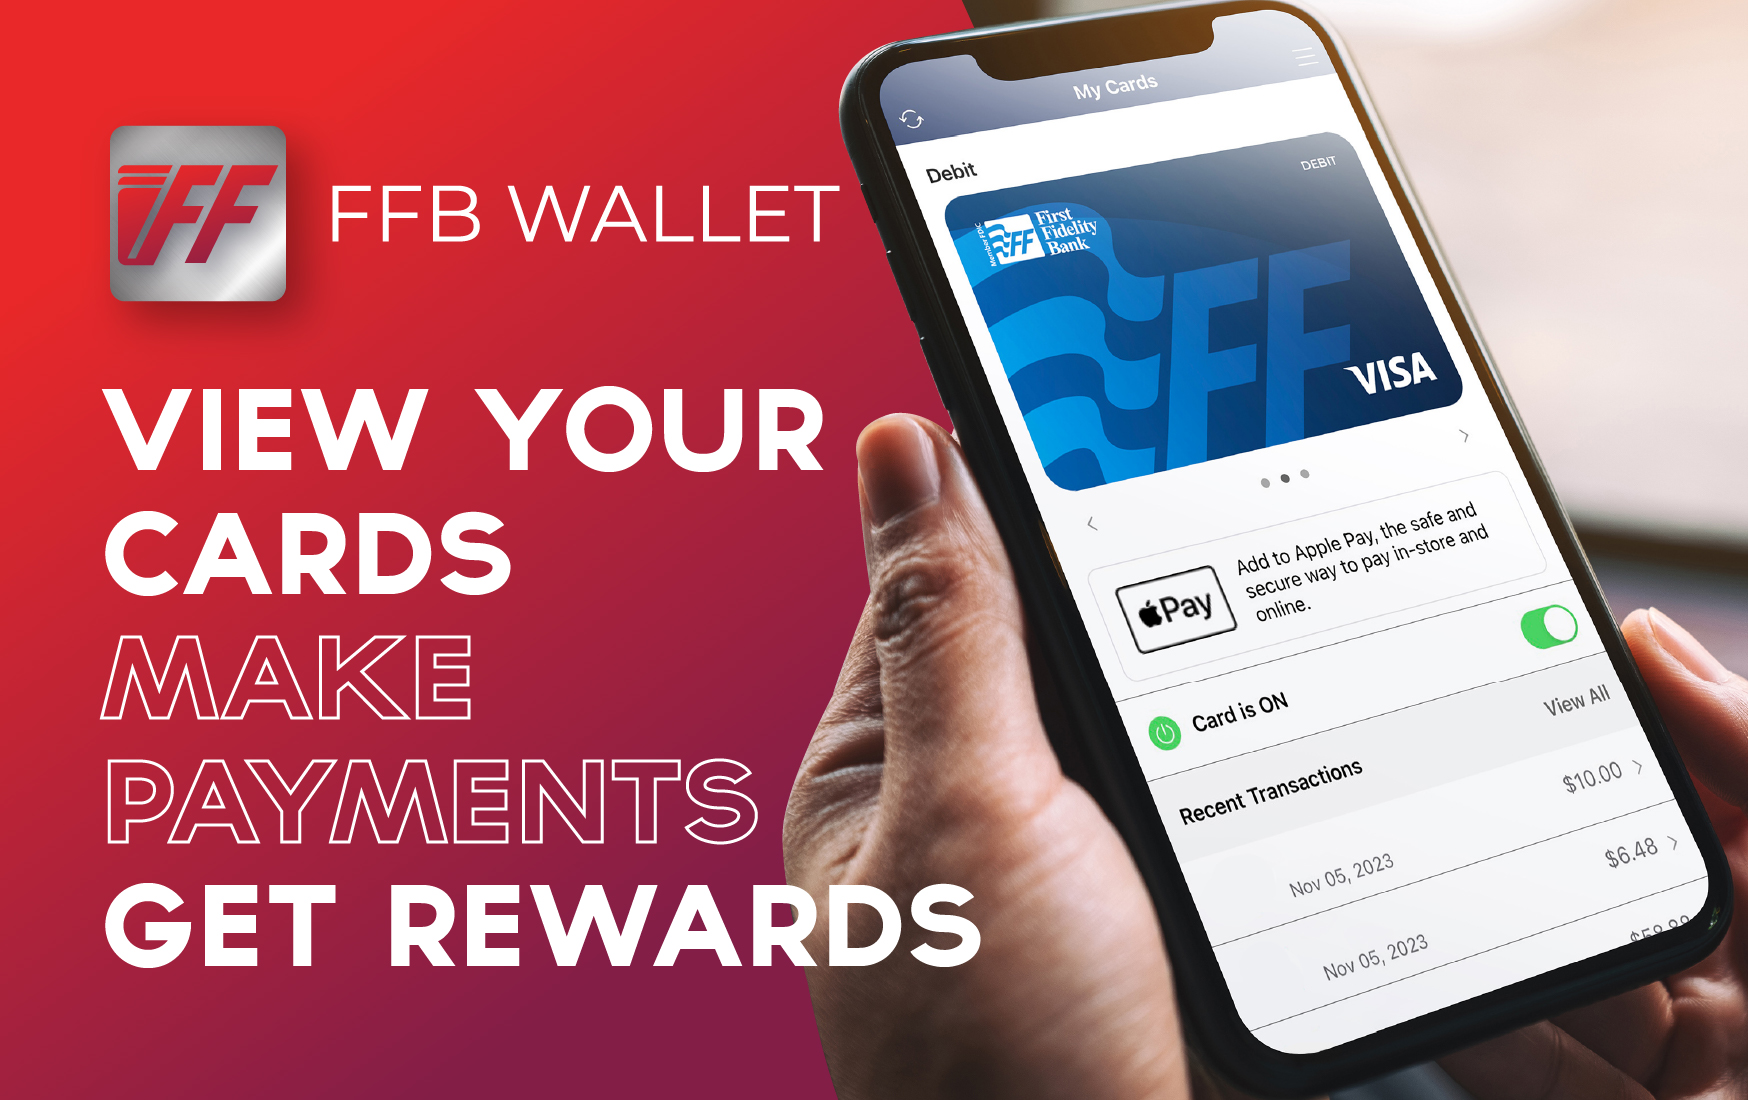 FFB Wallet App - View Cards, Make Payments, Get Rewards